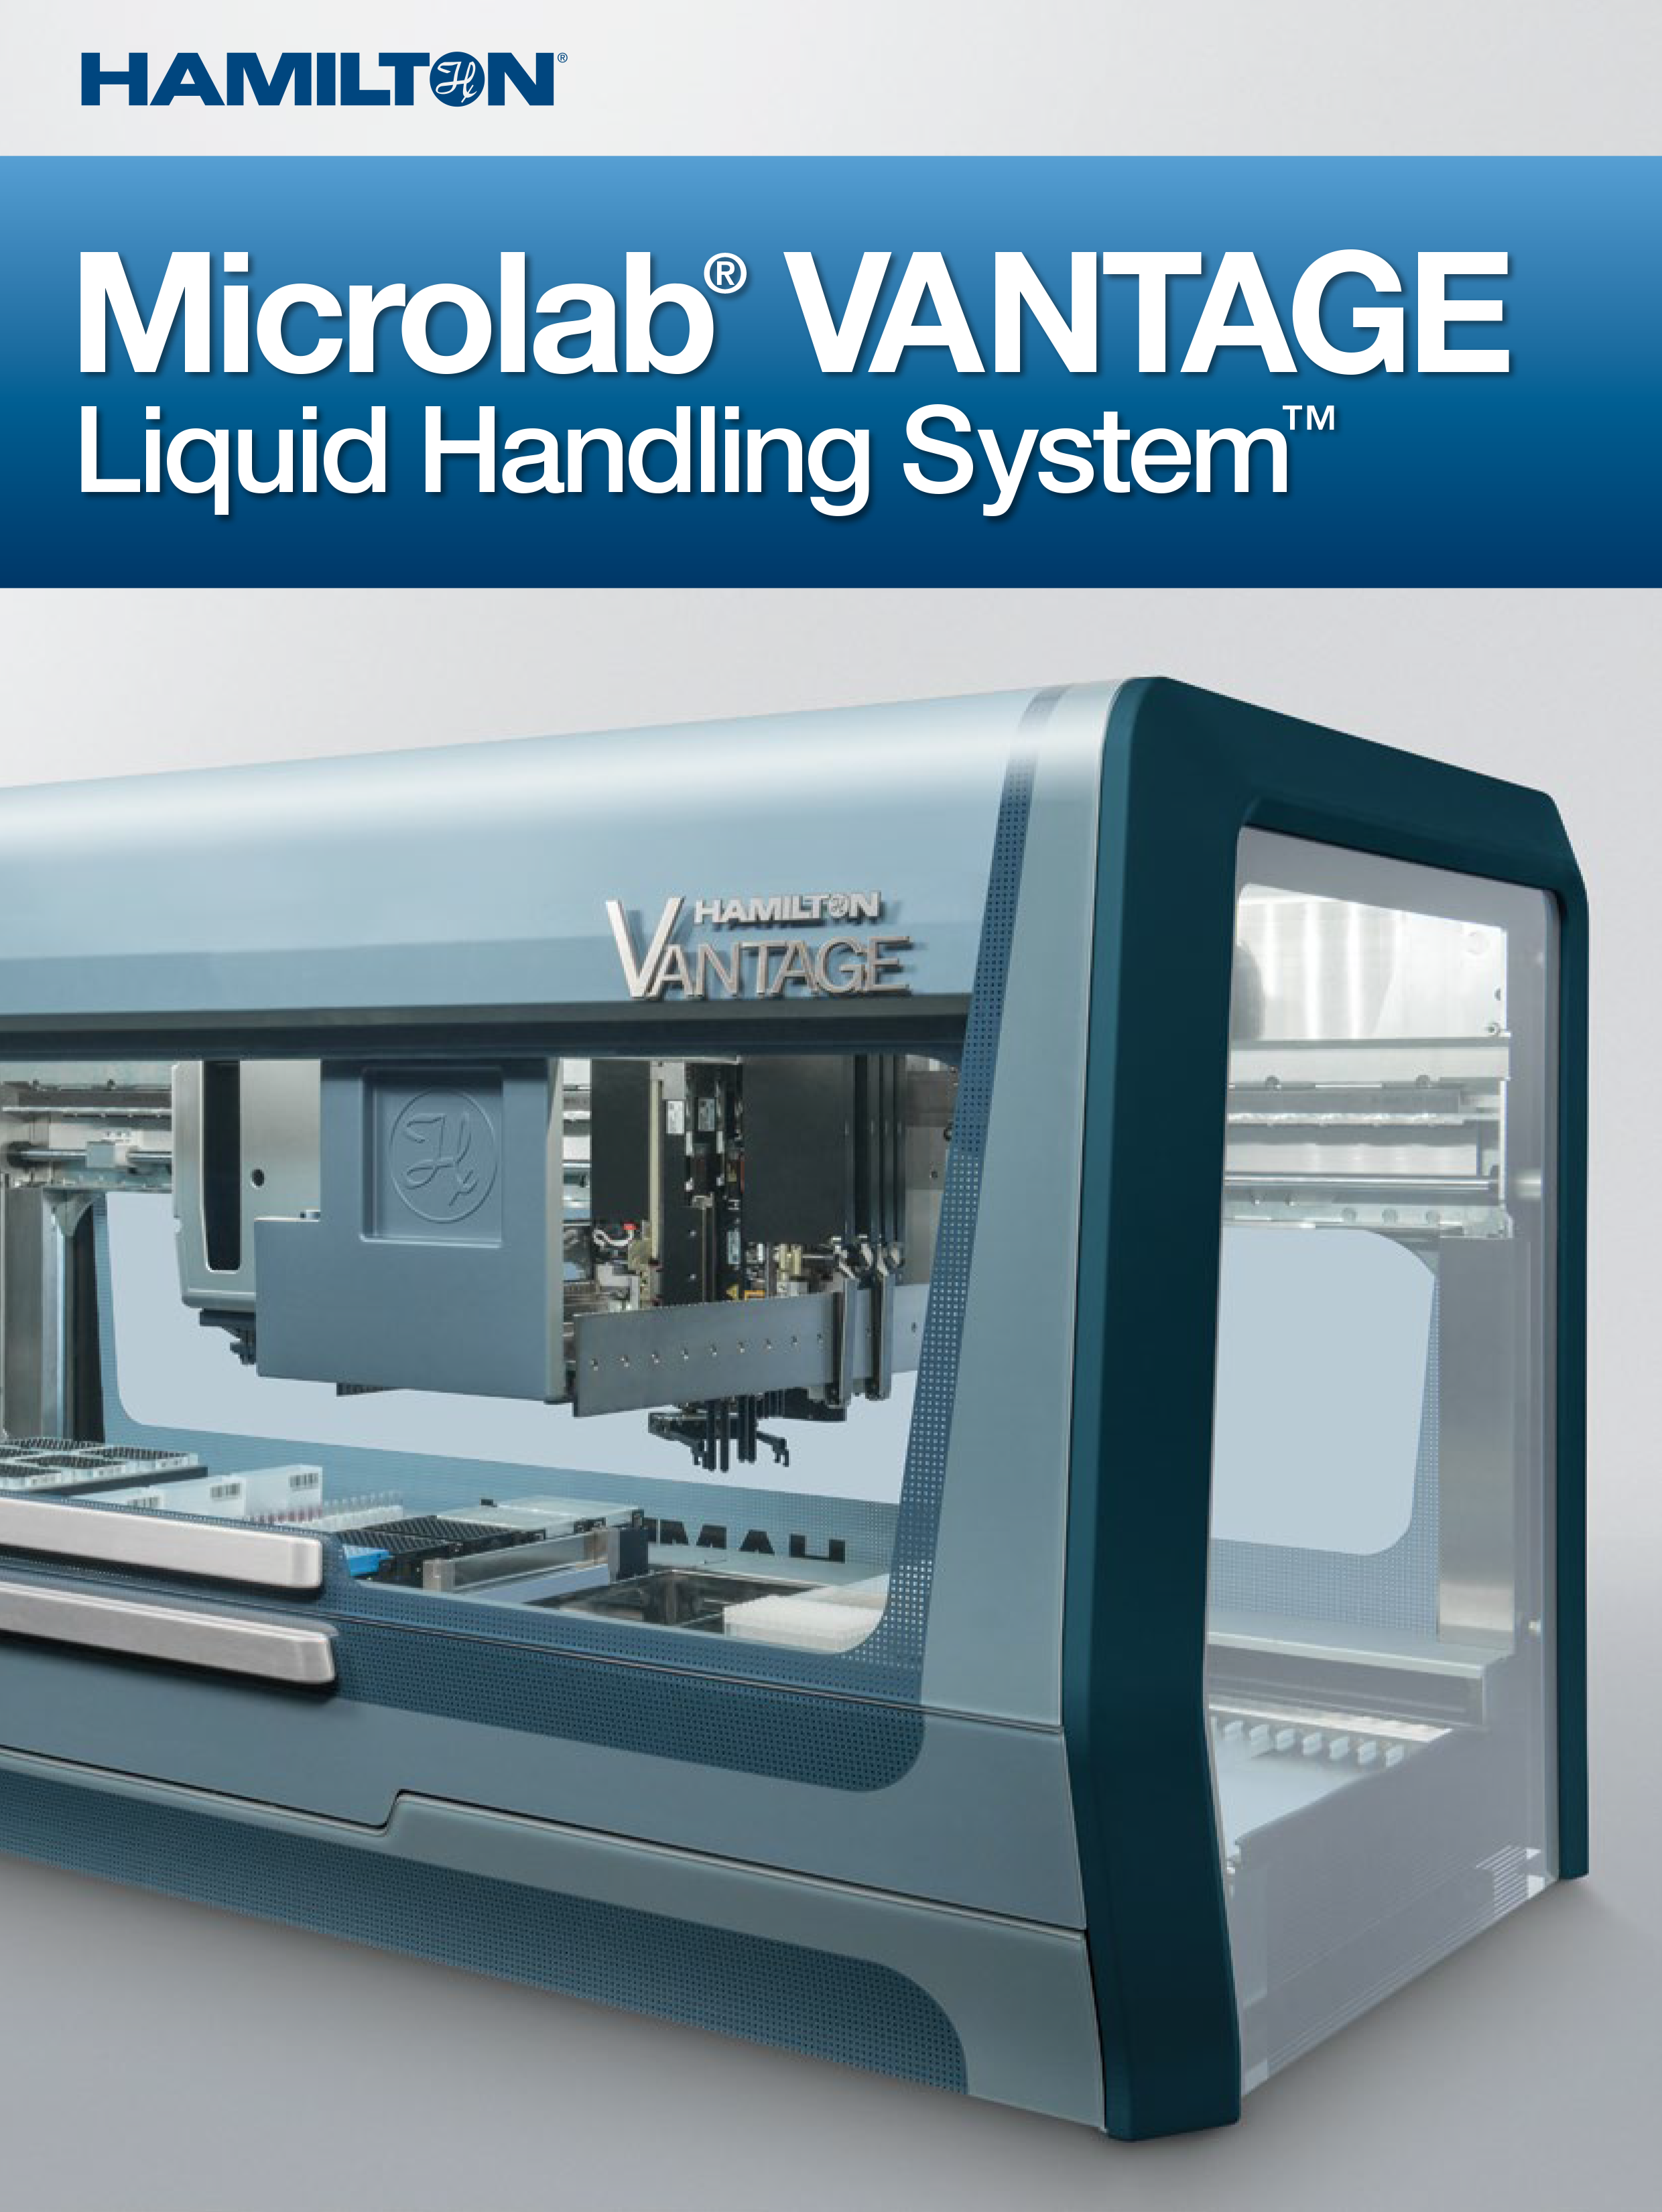 Microlab-VANTAGE-Brochure-1